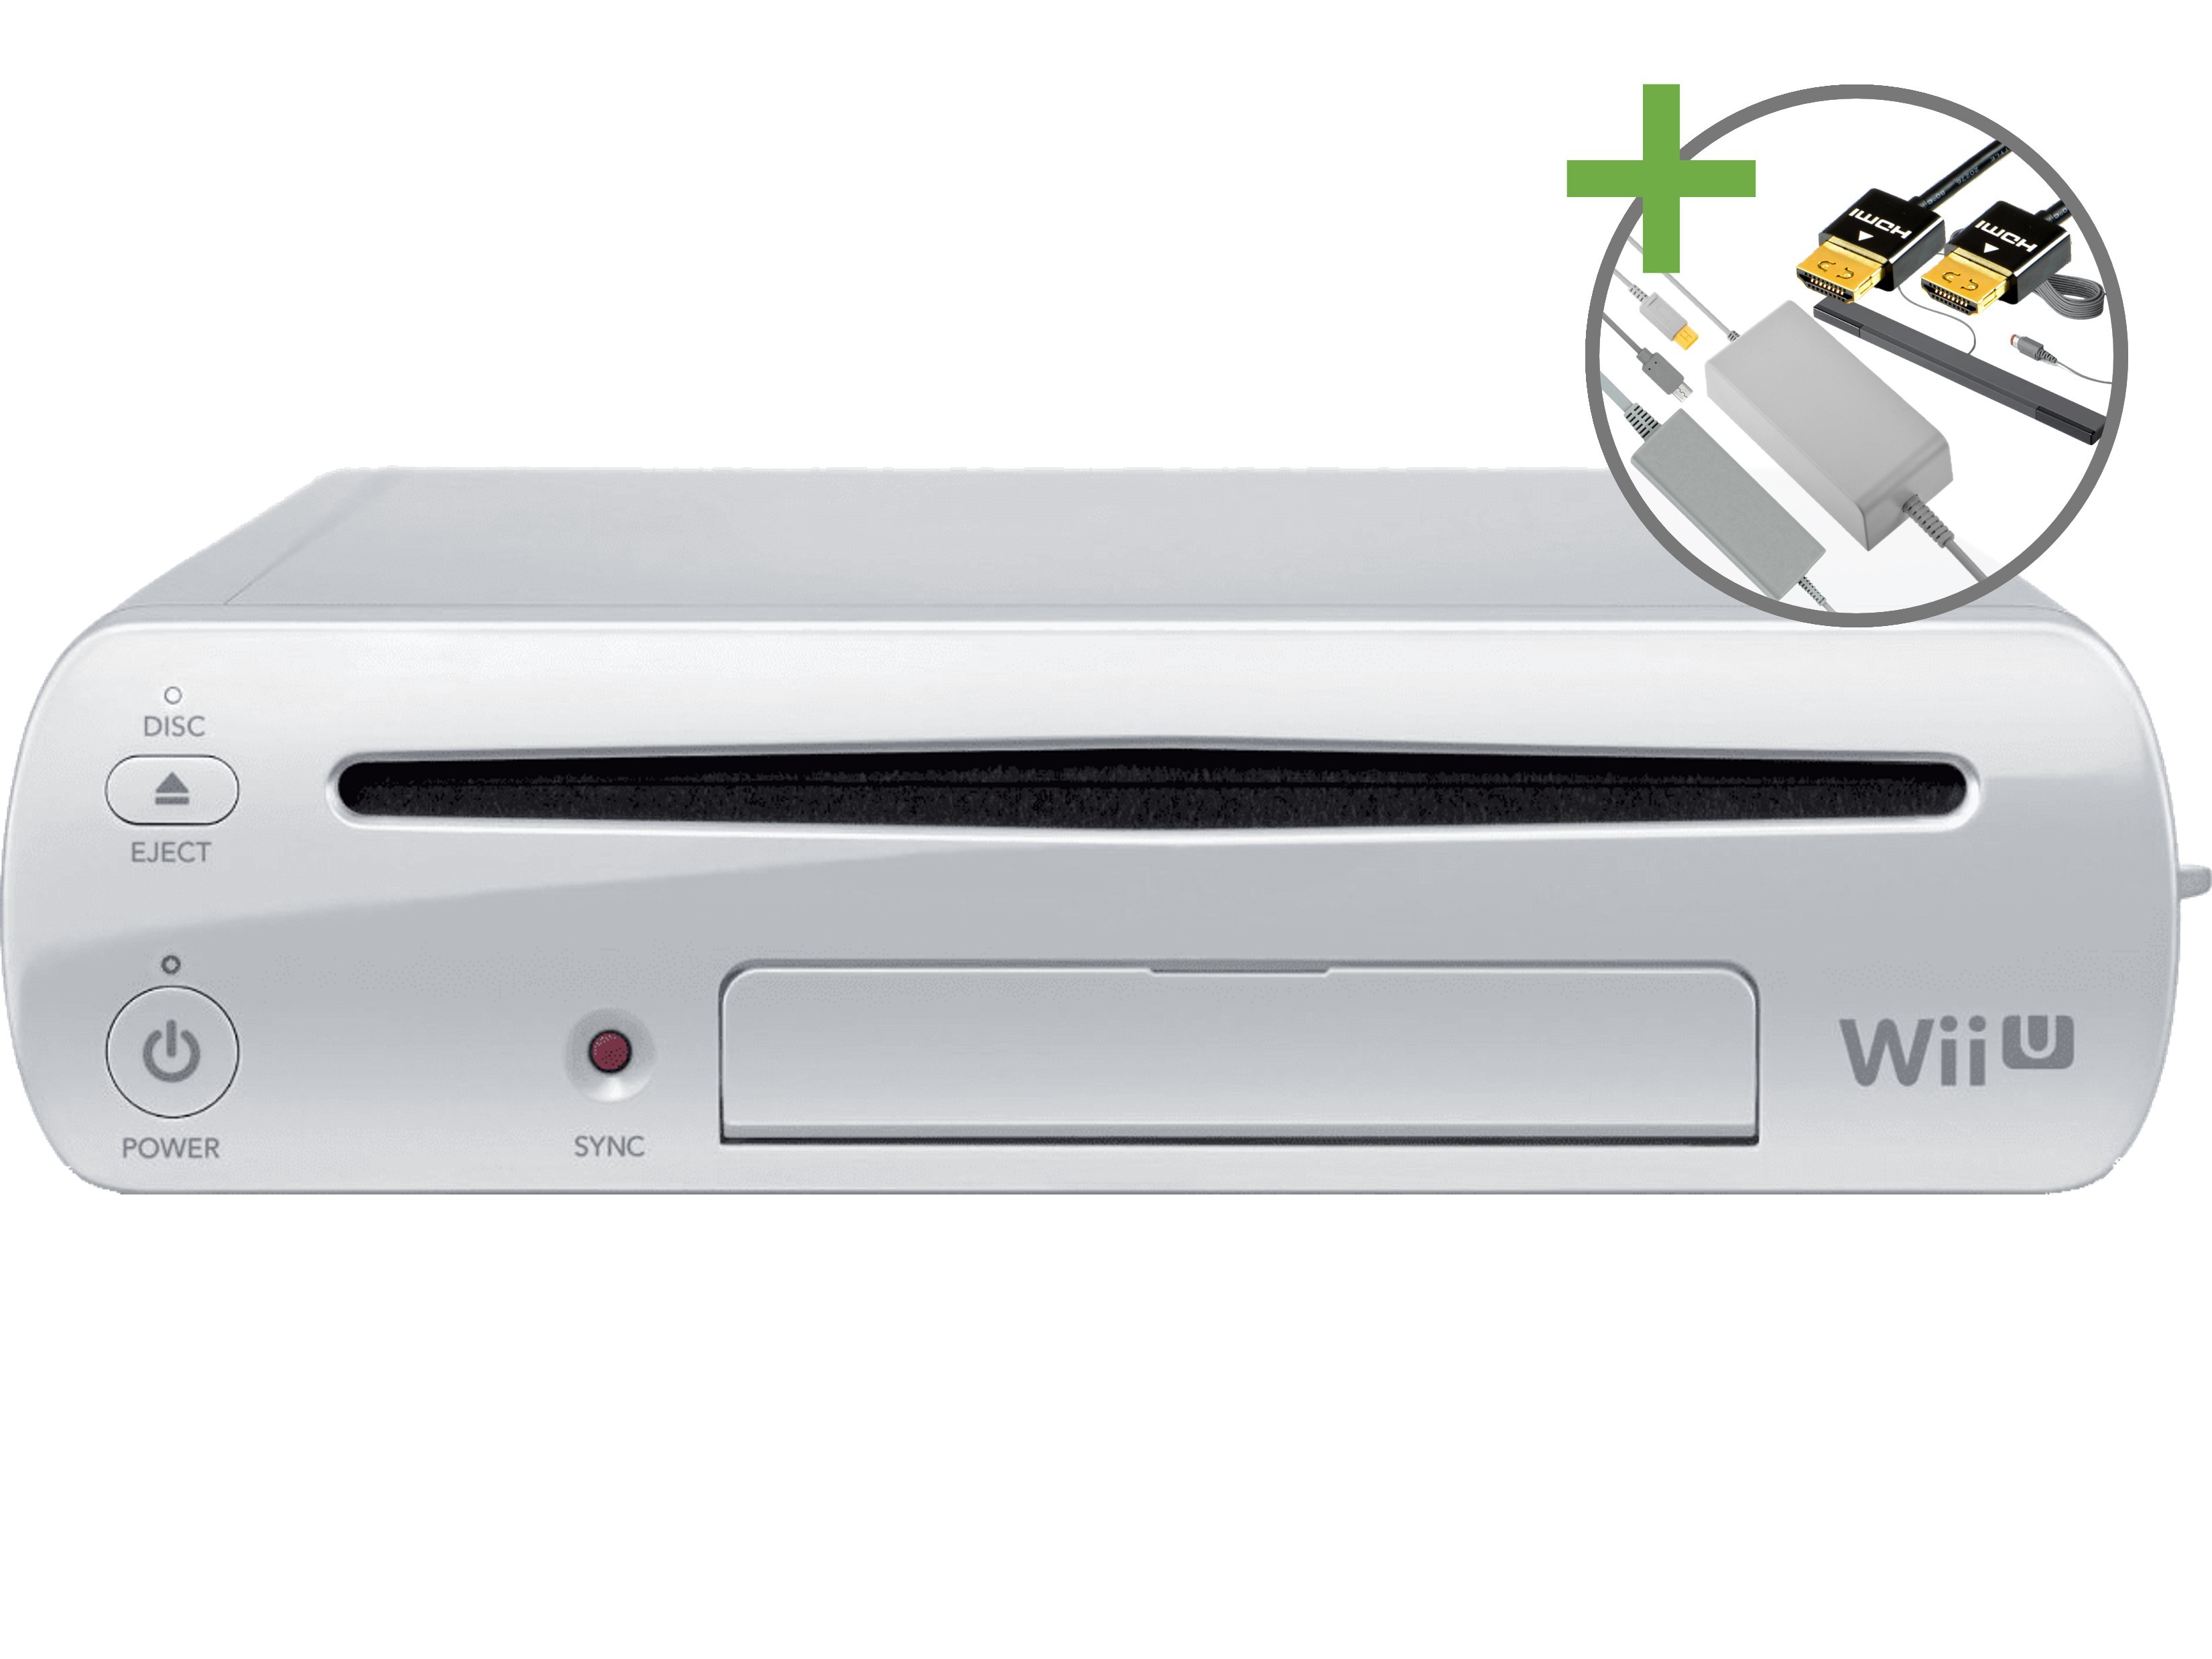 Nintendo Wii U Starter Pack - Just Dance 2014 Edition [Complete] - Wii U Hardware - 4